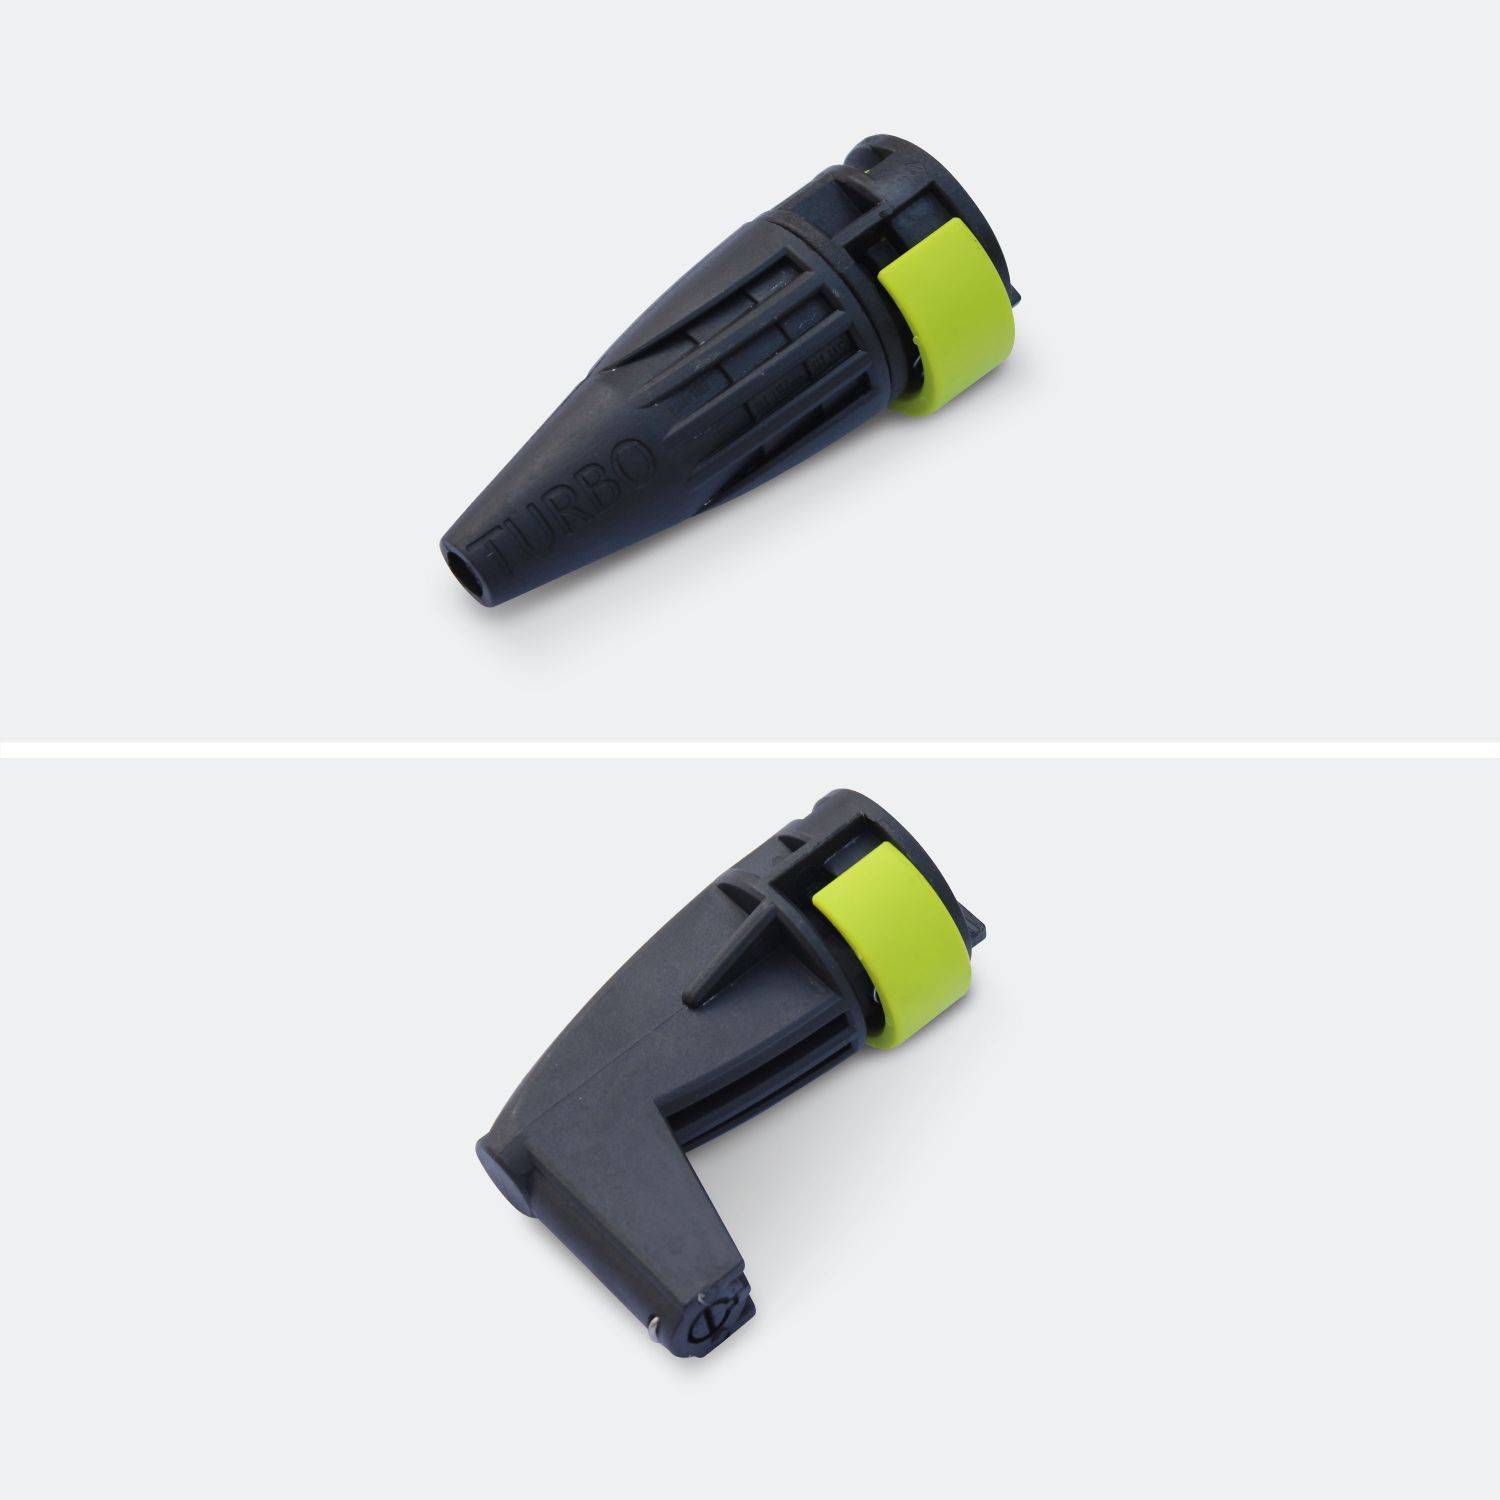 Accessoires pour nettoyeurs haute pression VOLTR brosse douce, buse d'angle, brosse rotative, rotabuse (turbo) Photo5